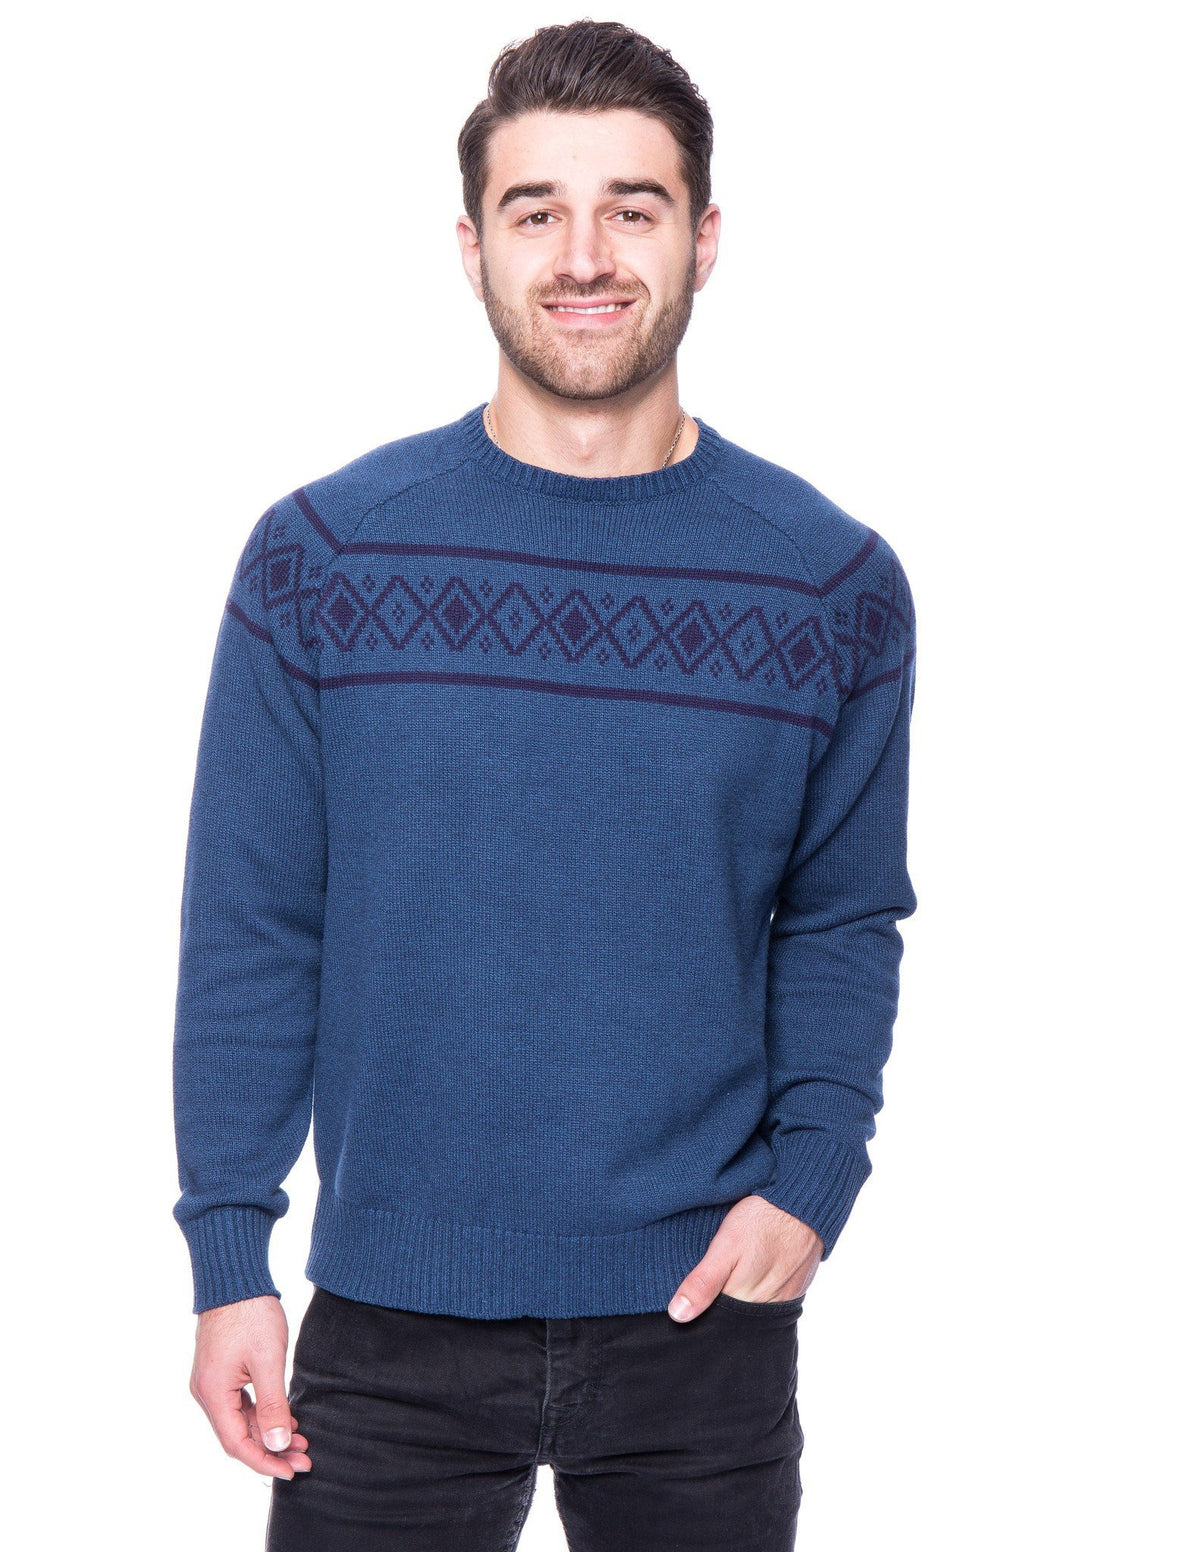 Men's 100% Cotton Crew Neck Sweater with Fair Isle Stripe - Marl Navy/Teal